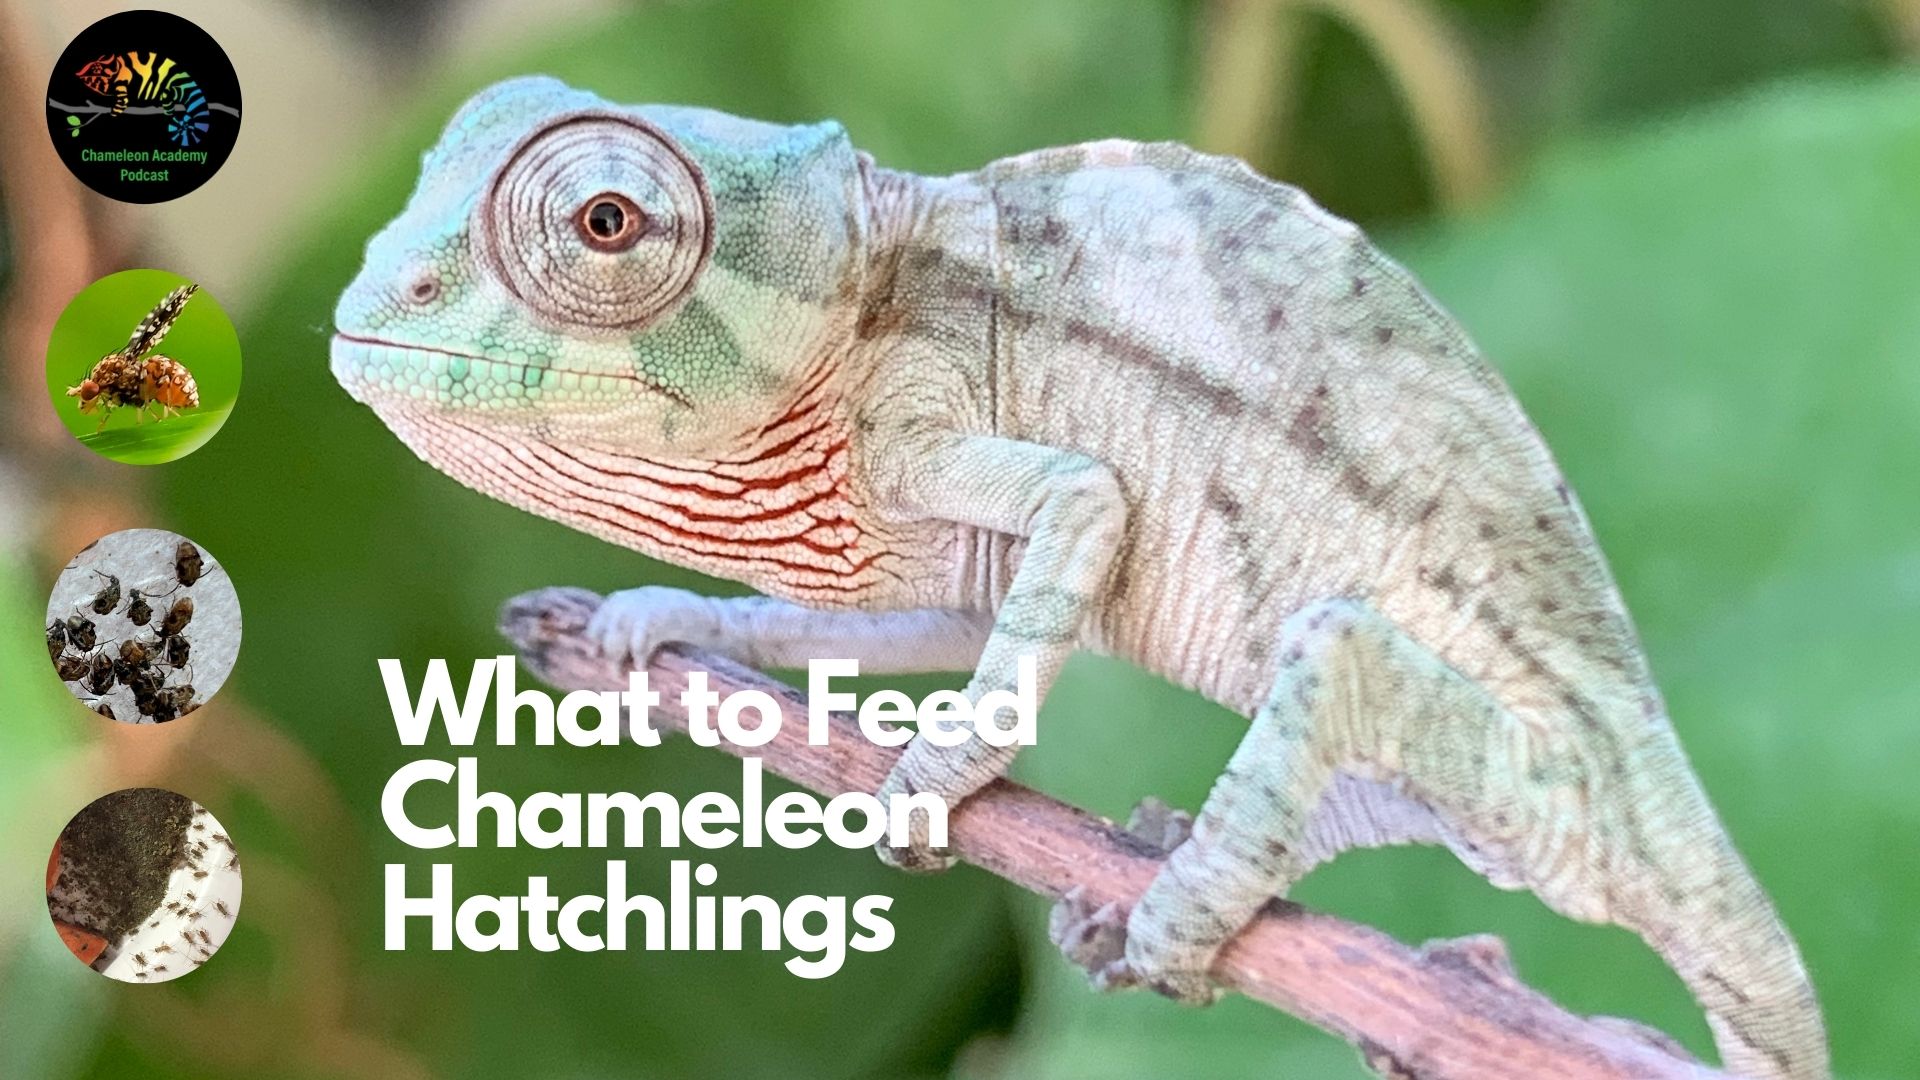 What to Feed Hatchling Chameleons - Chameleon Academy